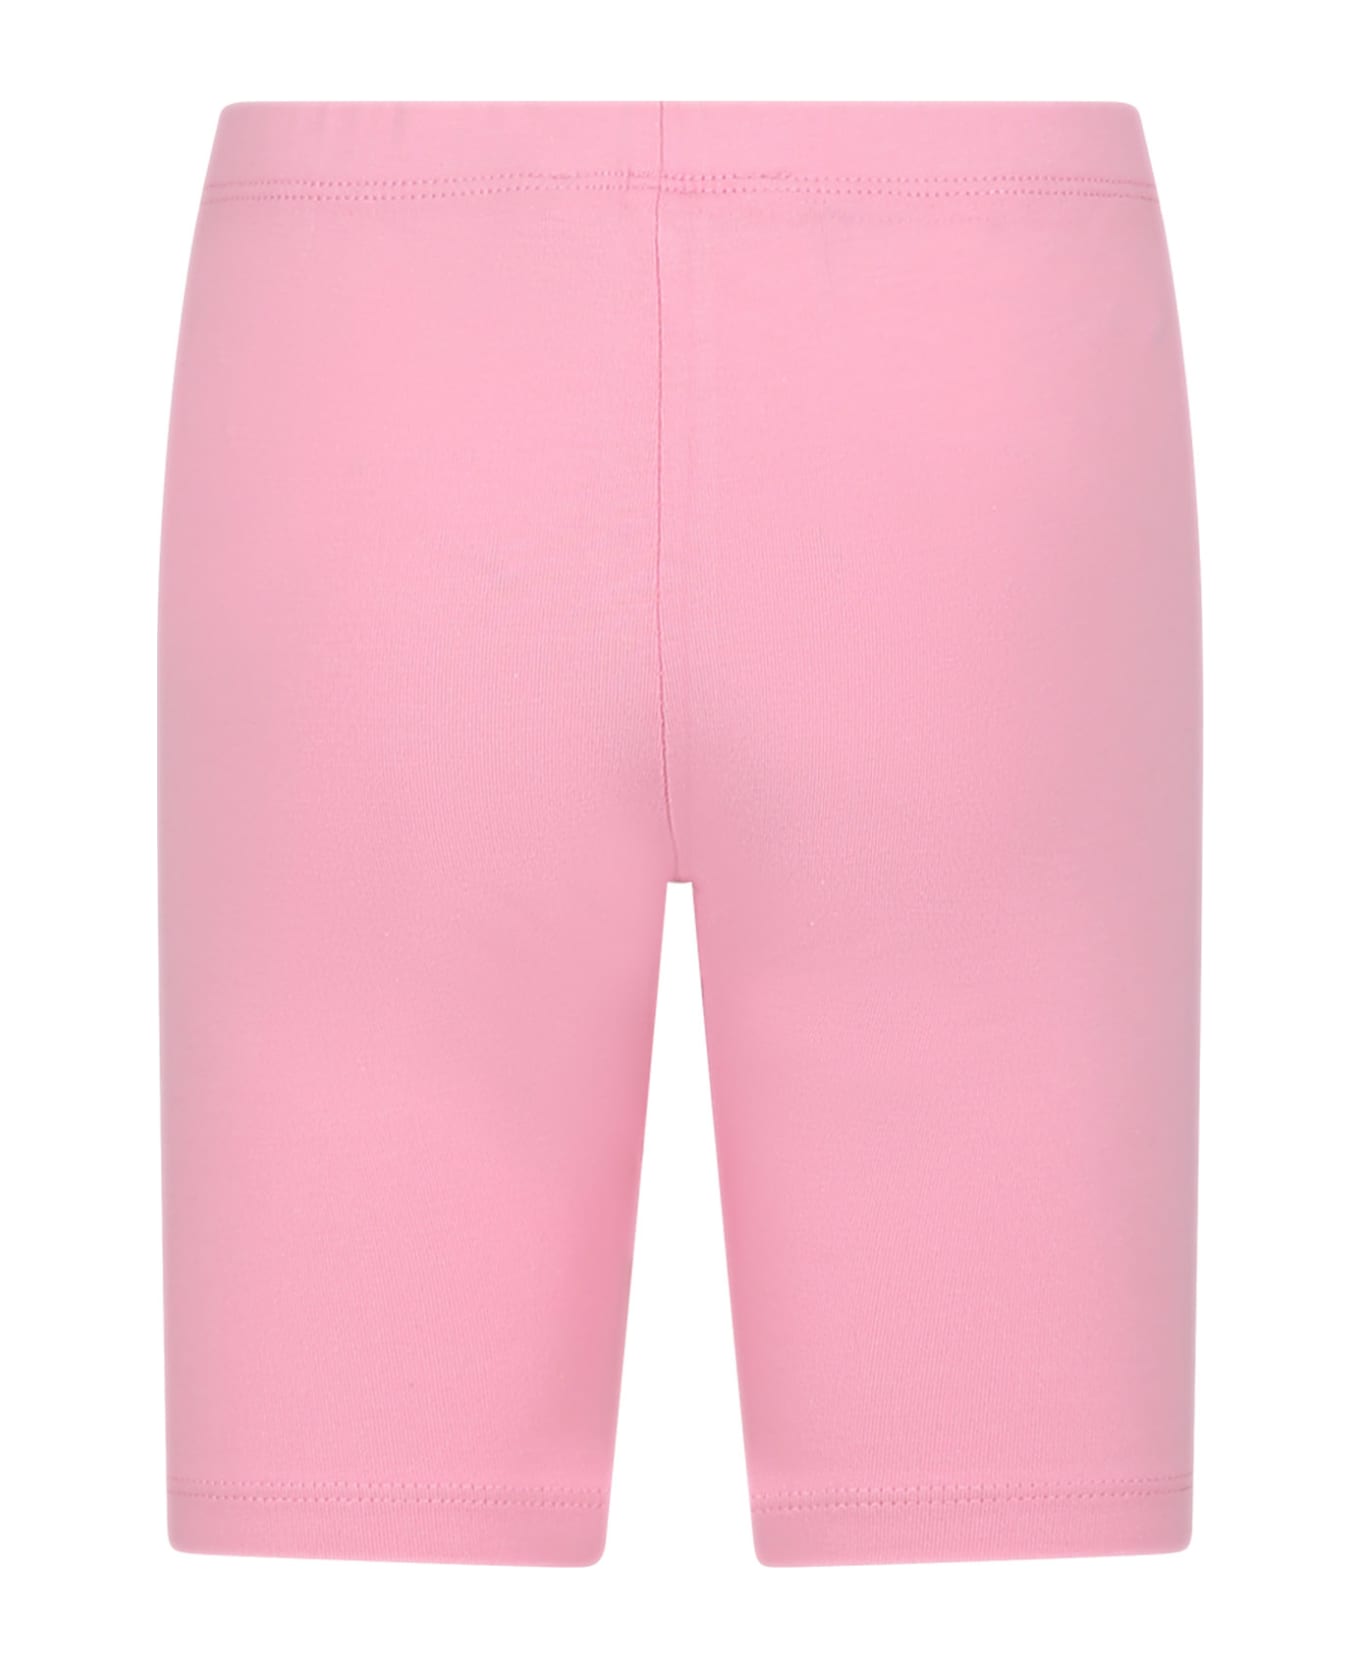 Marni Pink Sports Shorts For Girl - Pink ボトムス